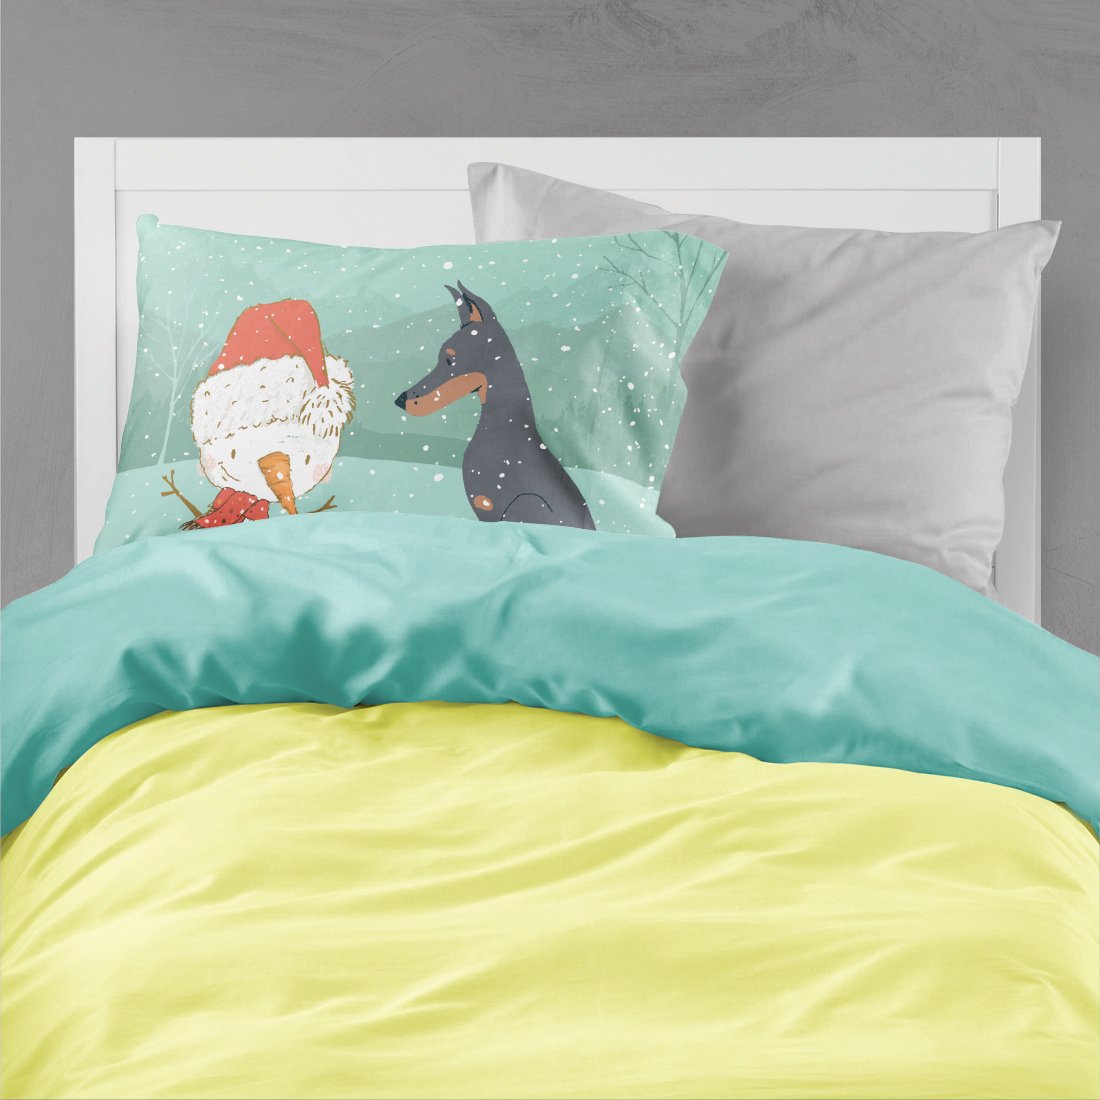 Doberman and Snowman Christmas Fabric Standard Pillowcase CK2038PILLOWCASE by Caroline's Treasures